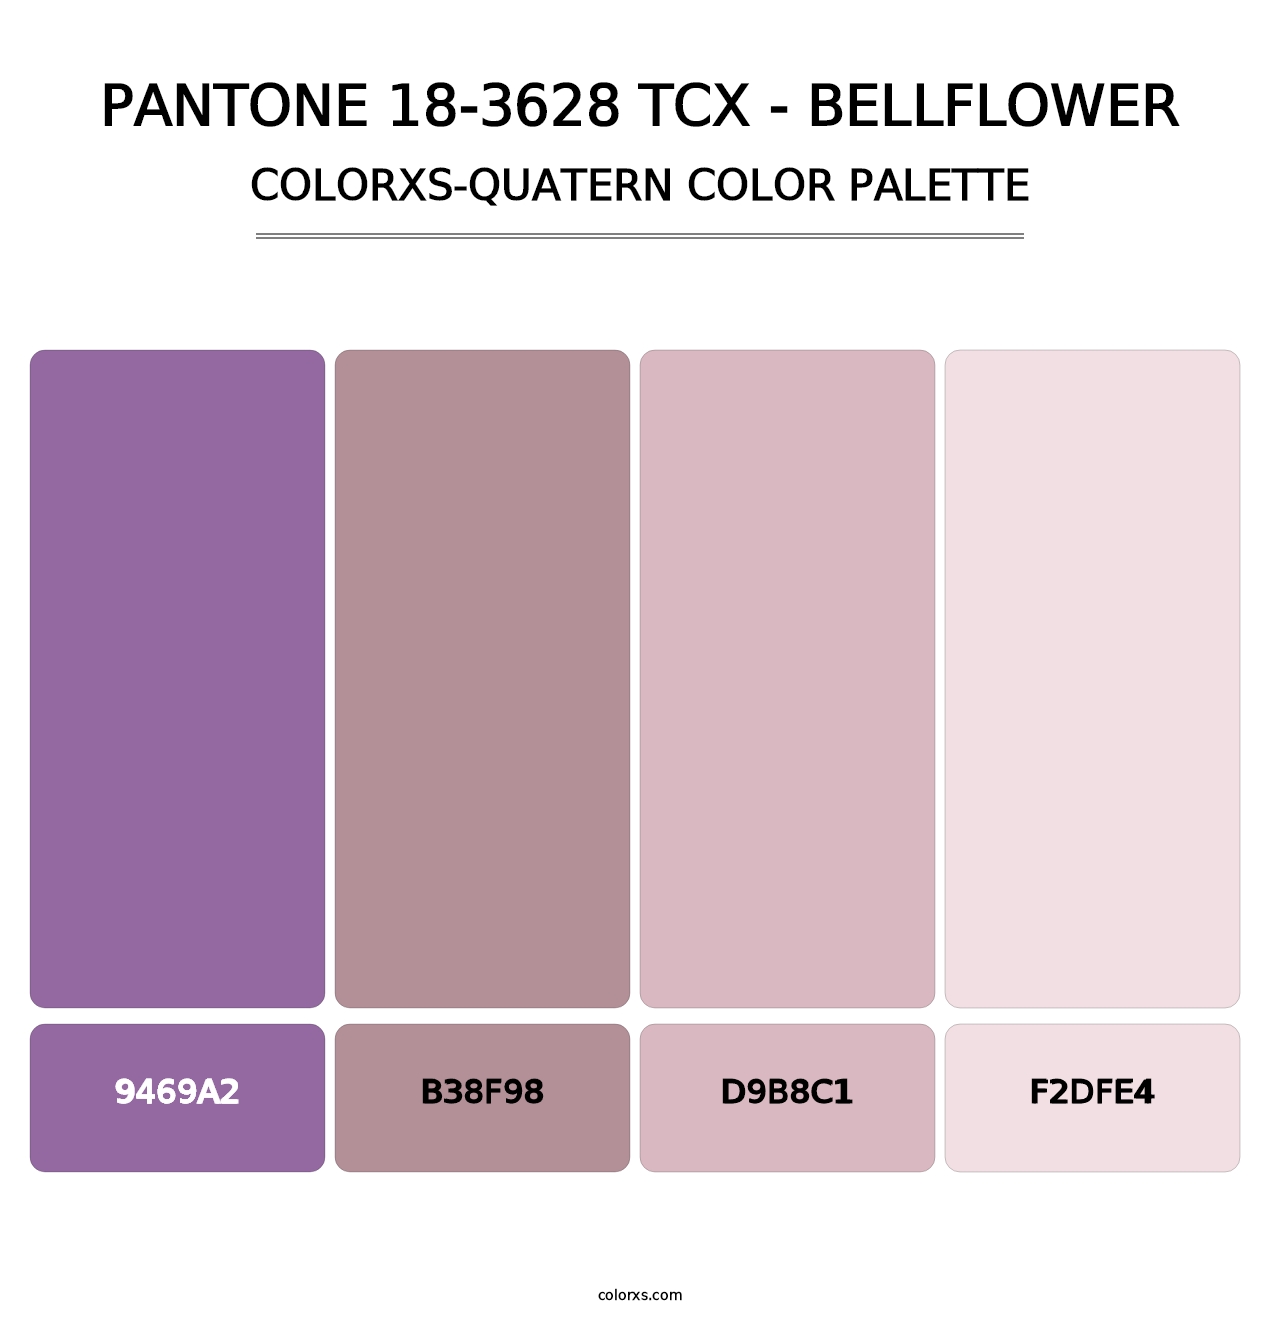 PANTONE 18-3628 TCX - Bellflower - Colorxs Quatern Palette